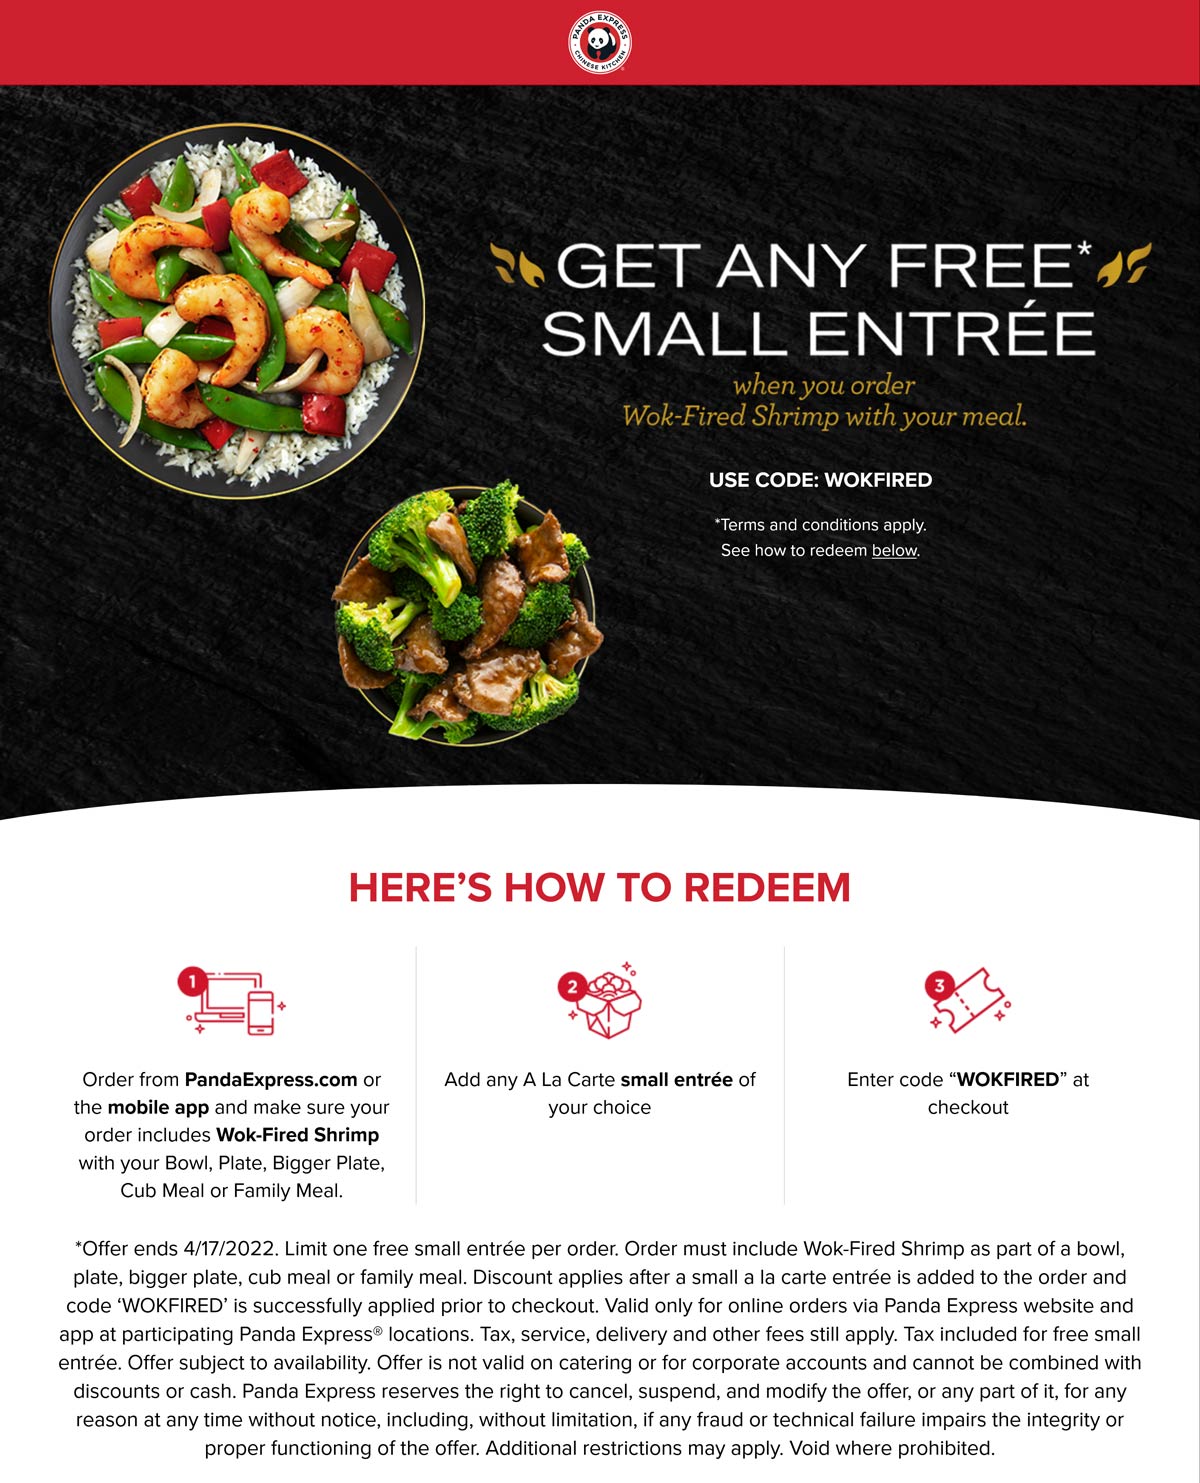 Panda Express restaurants Coupon  Free entree with your wok-fired shrimp at Panda Express via promo code WOKFIRED #pandaexpress 